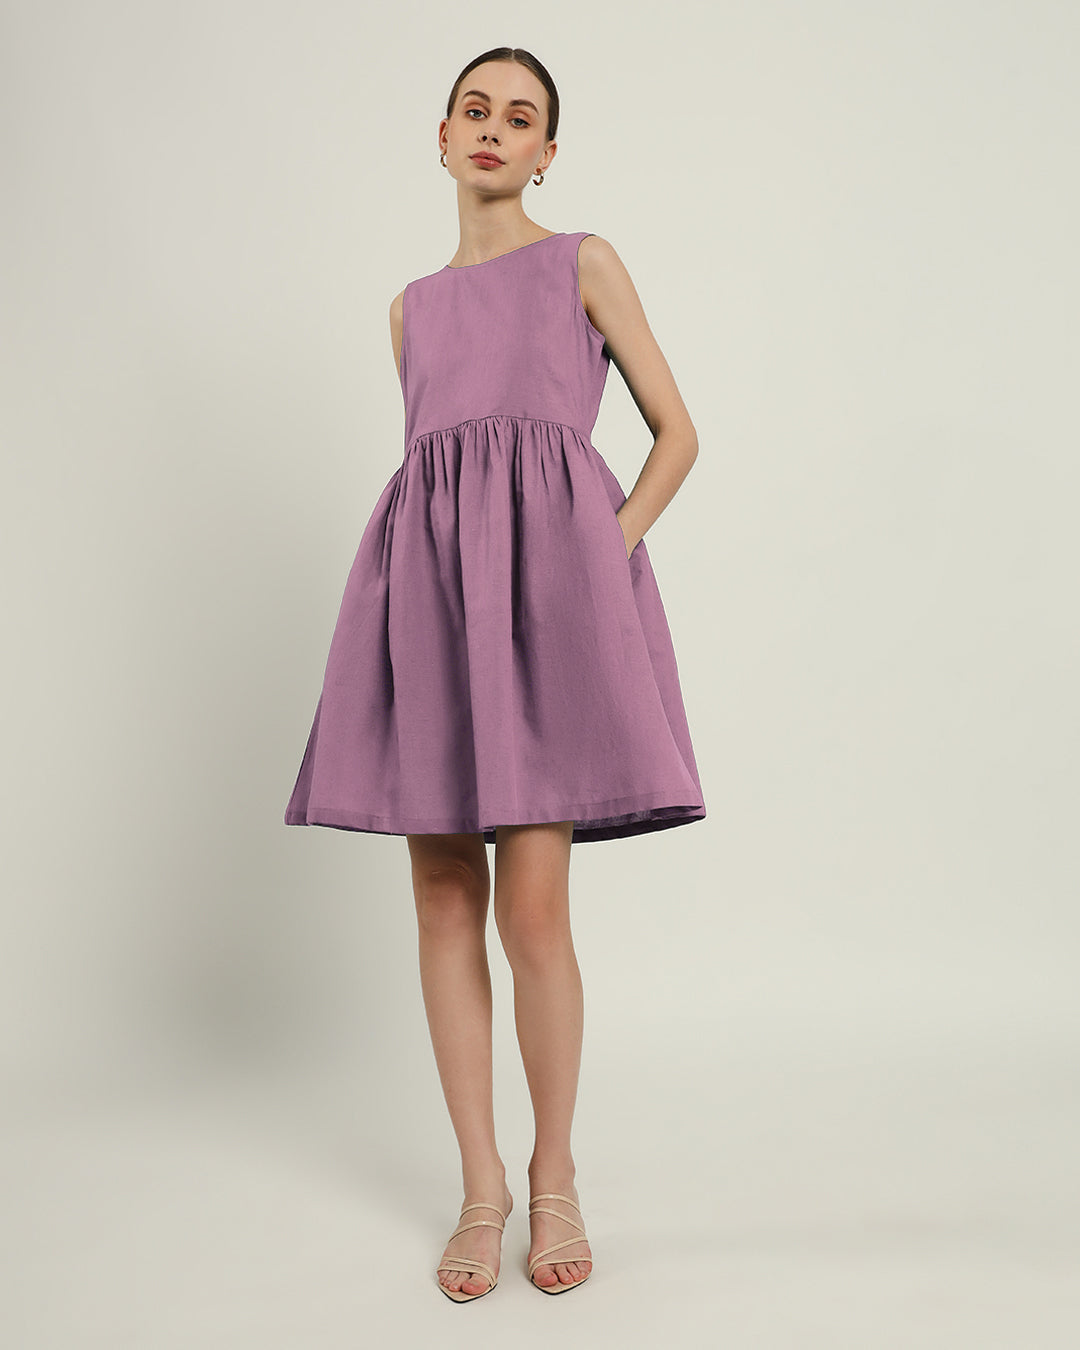 The Chania Purple Swirl Cotton Dress